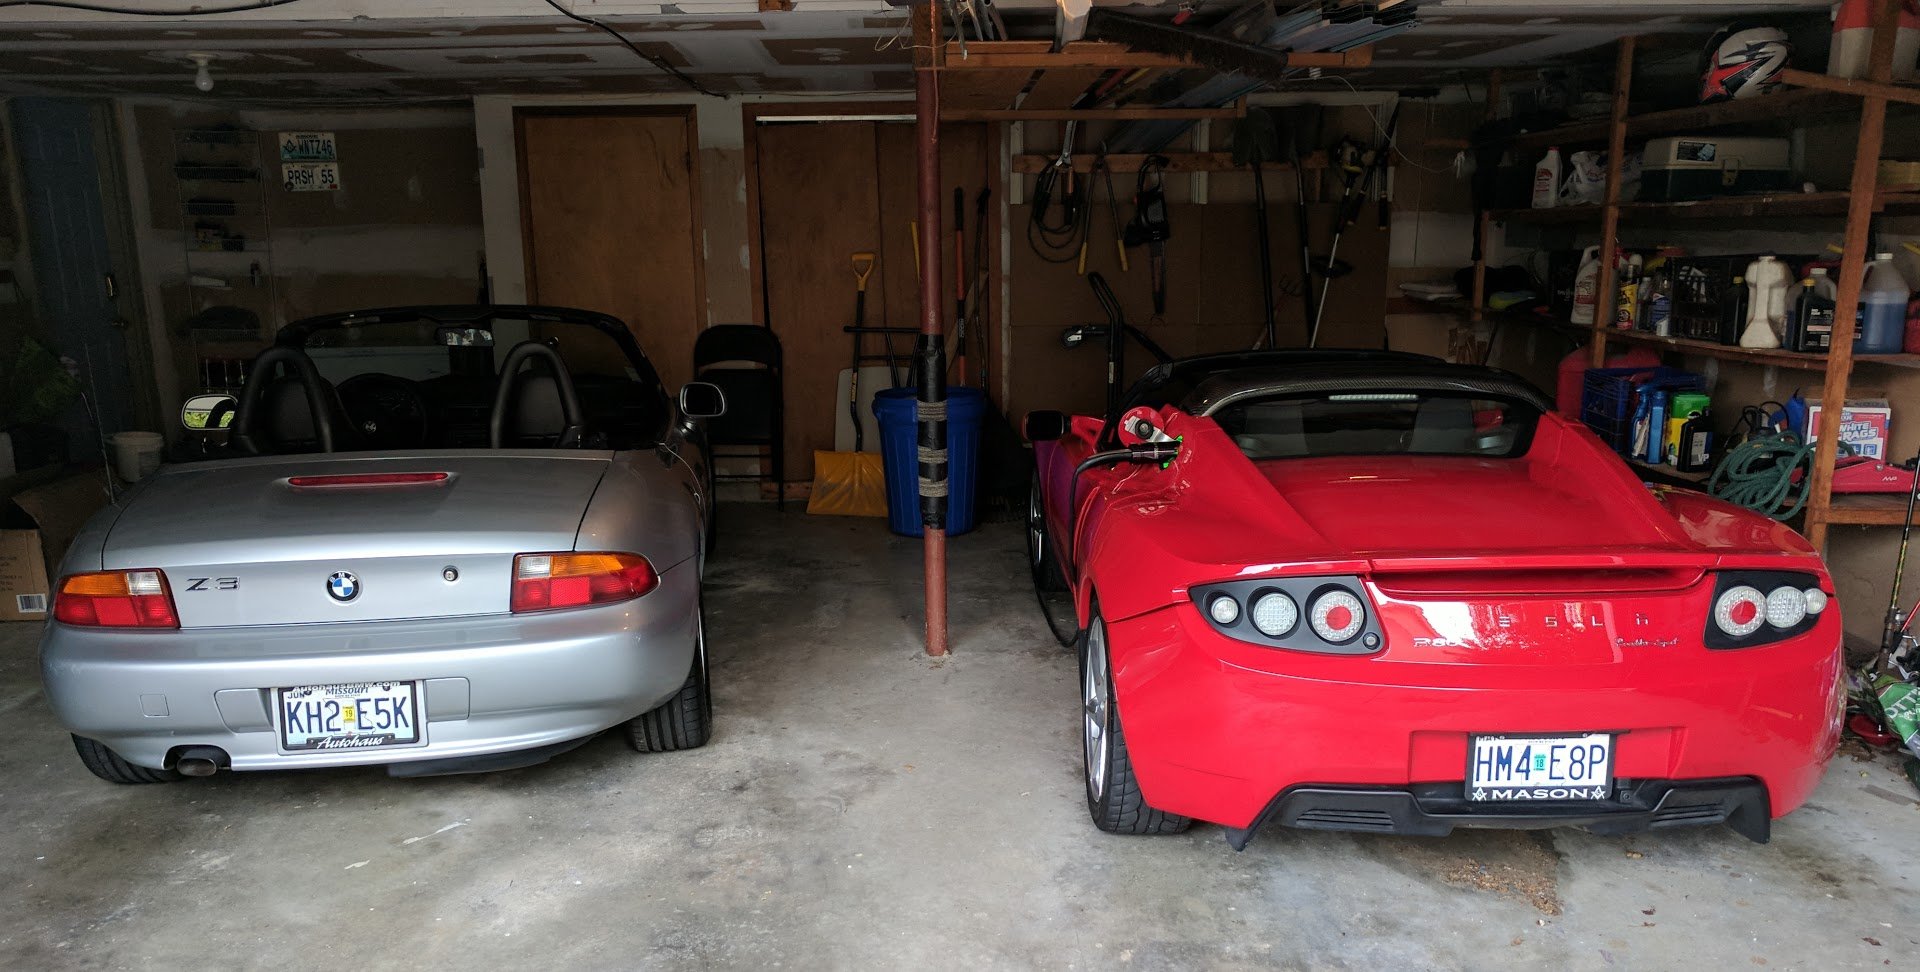 My Pair of Roadsters in the garage